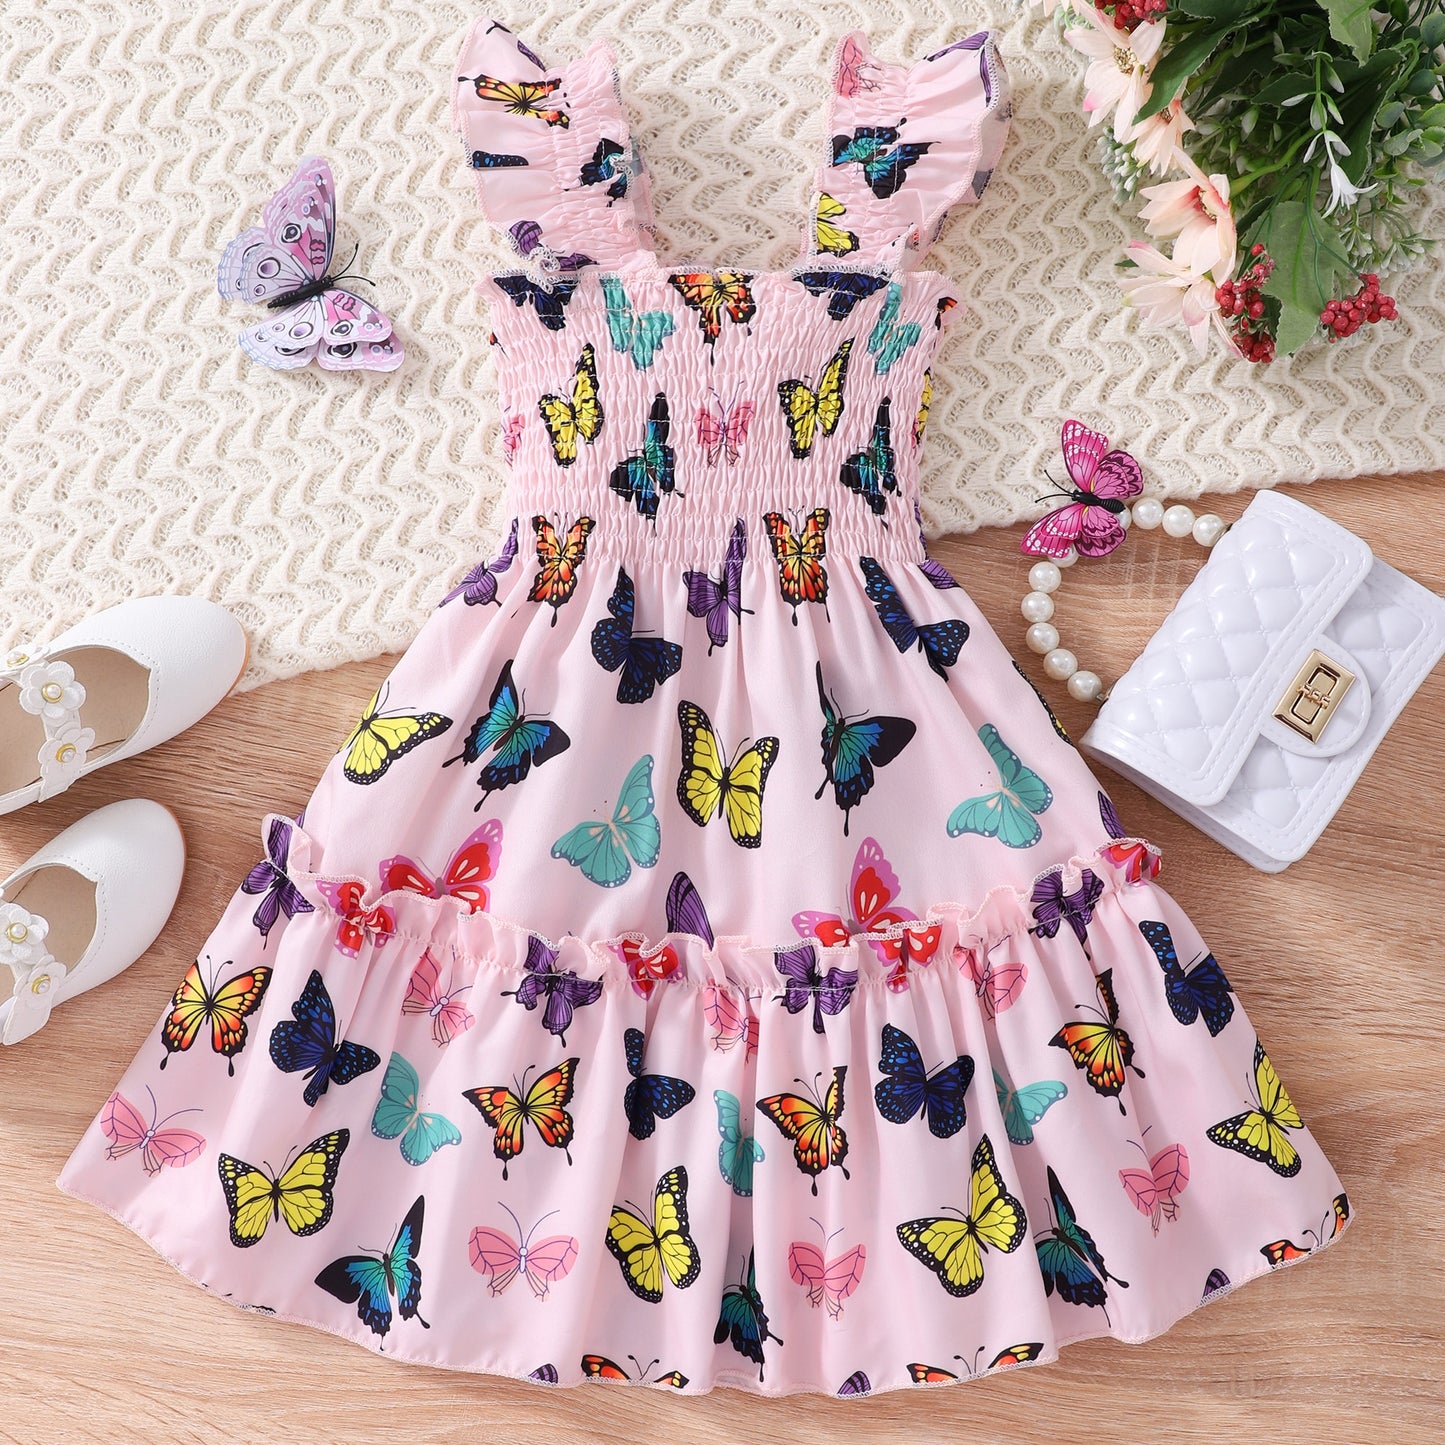 Cute Mermaid & Butterfly Kids Dresses